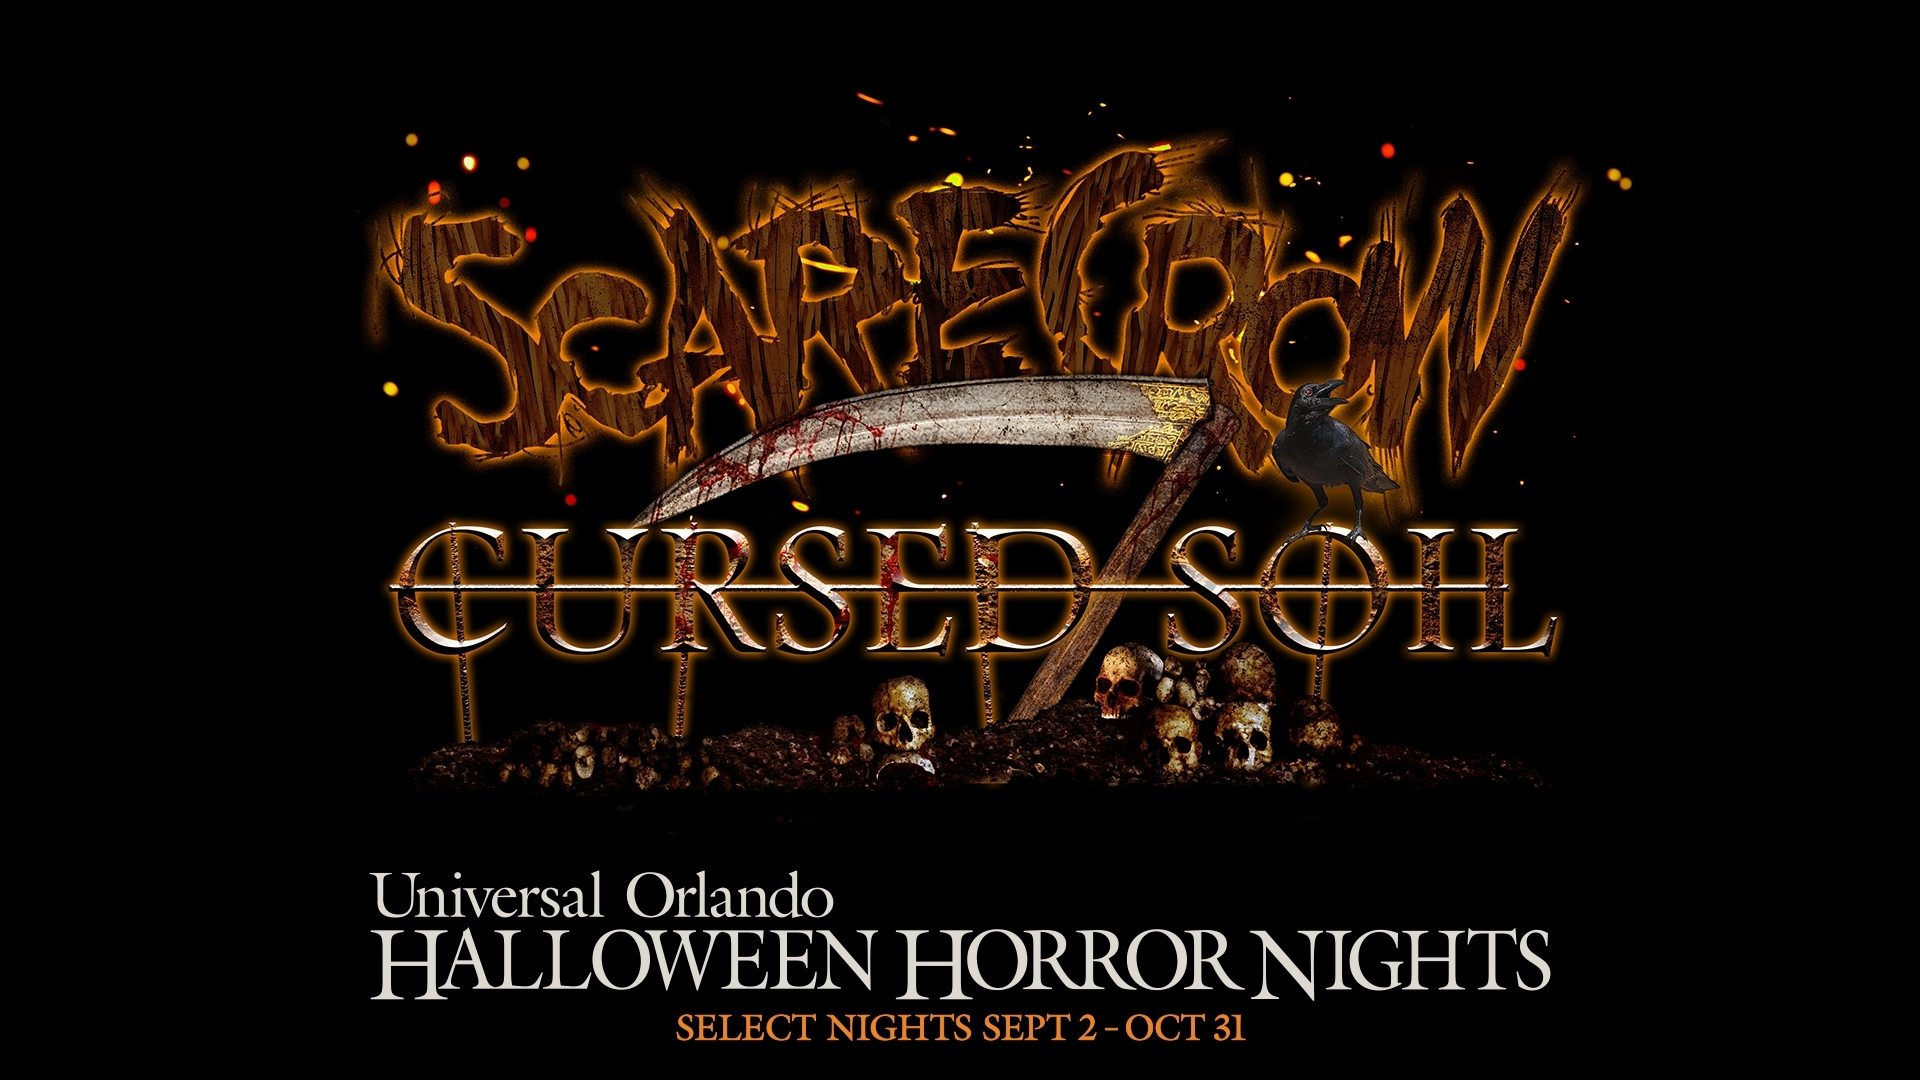 Scarecrow Cursed Soil Scare Zone Universal Studios HHN 31 Halloween Horror Nights 2022 UOR Photos